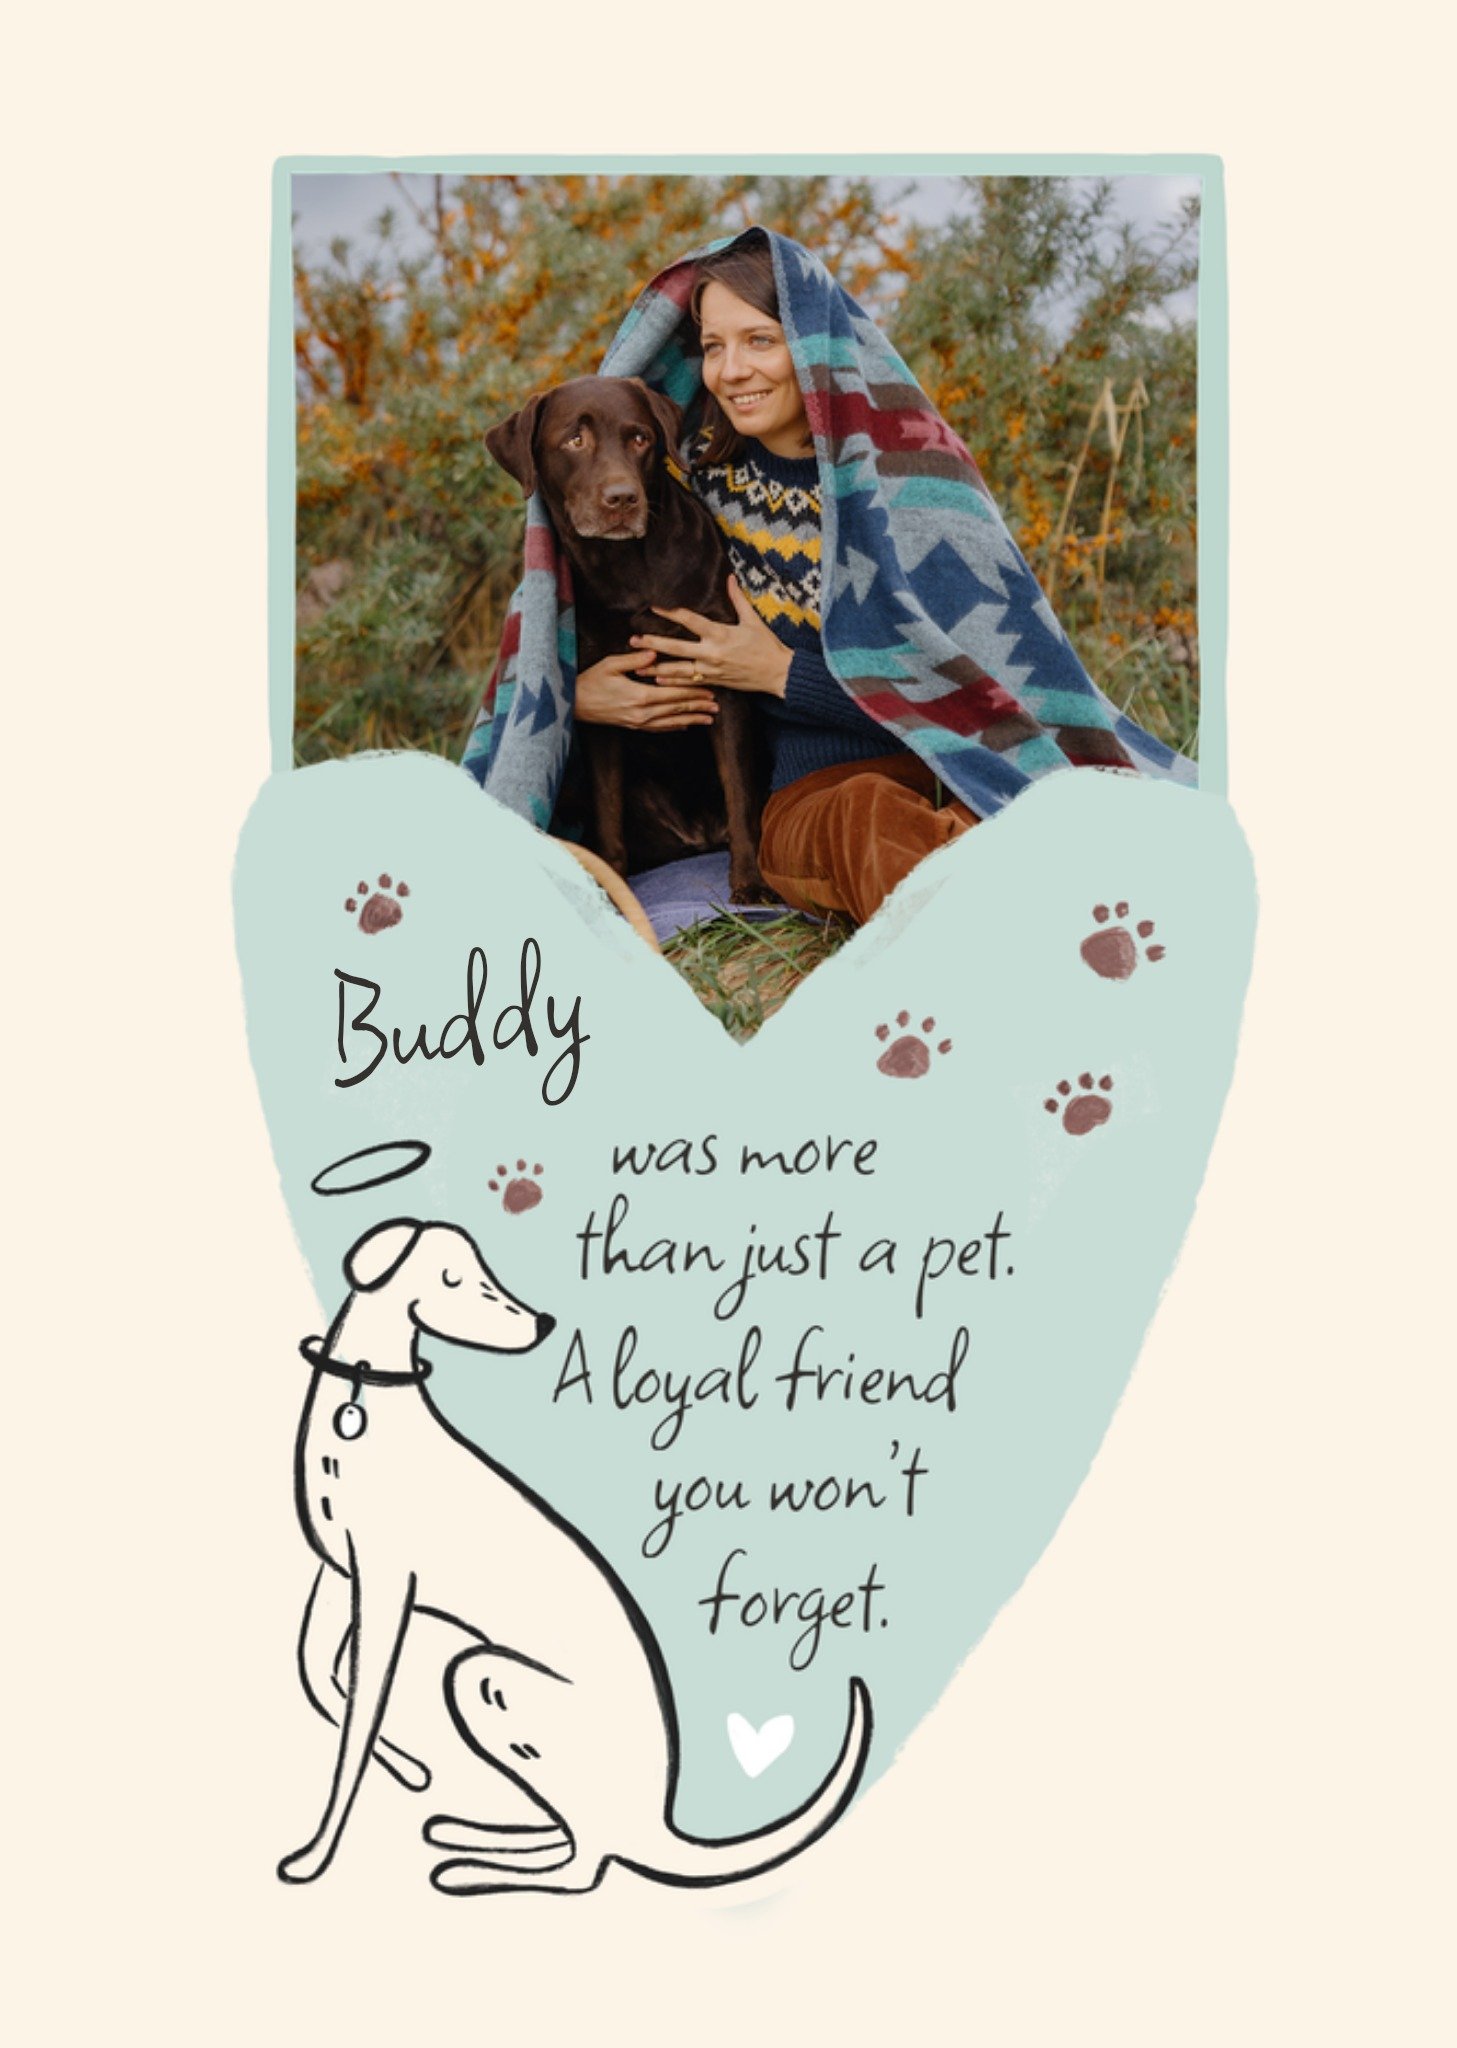 Moonpig A Loyal Friend You Won't Forget Pet Sympathy Photo Upload Card Ecard